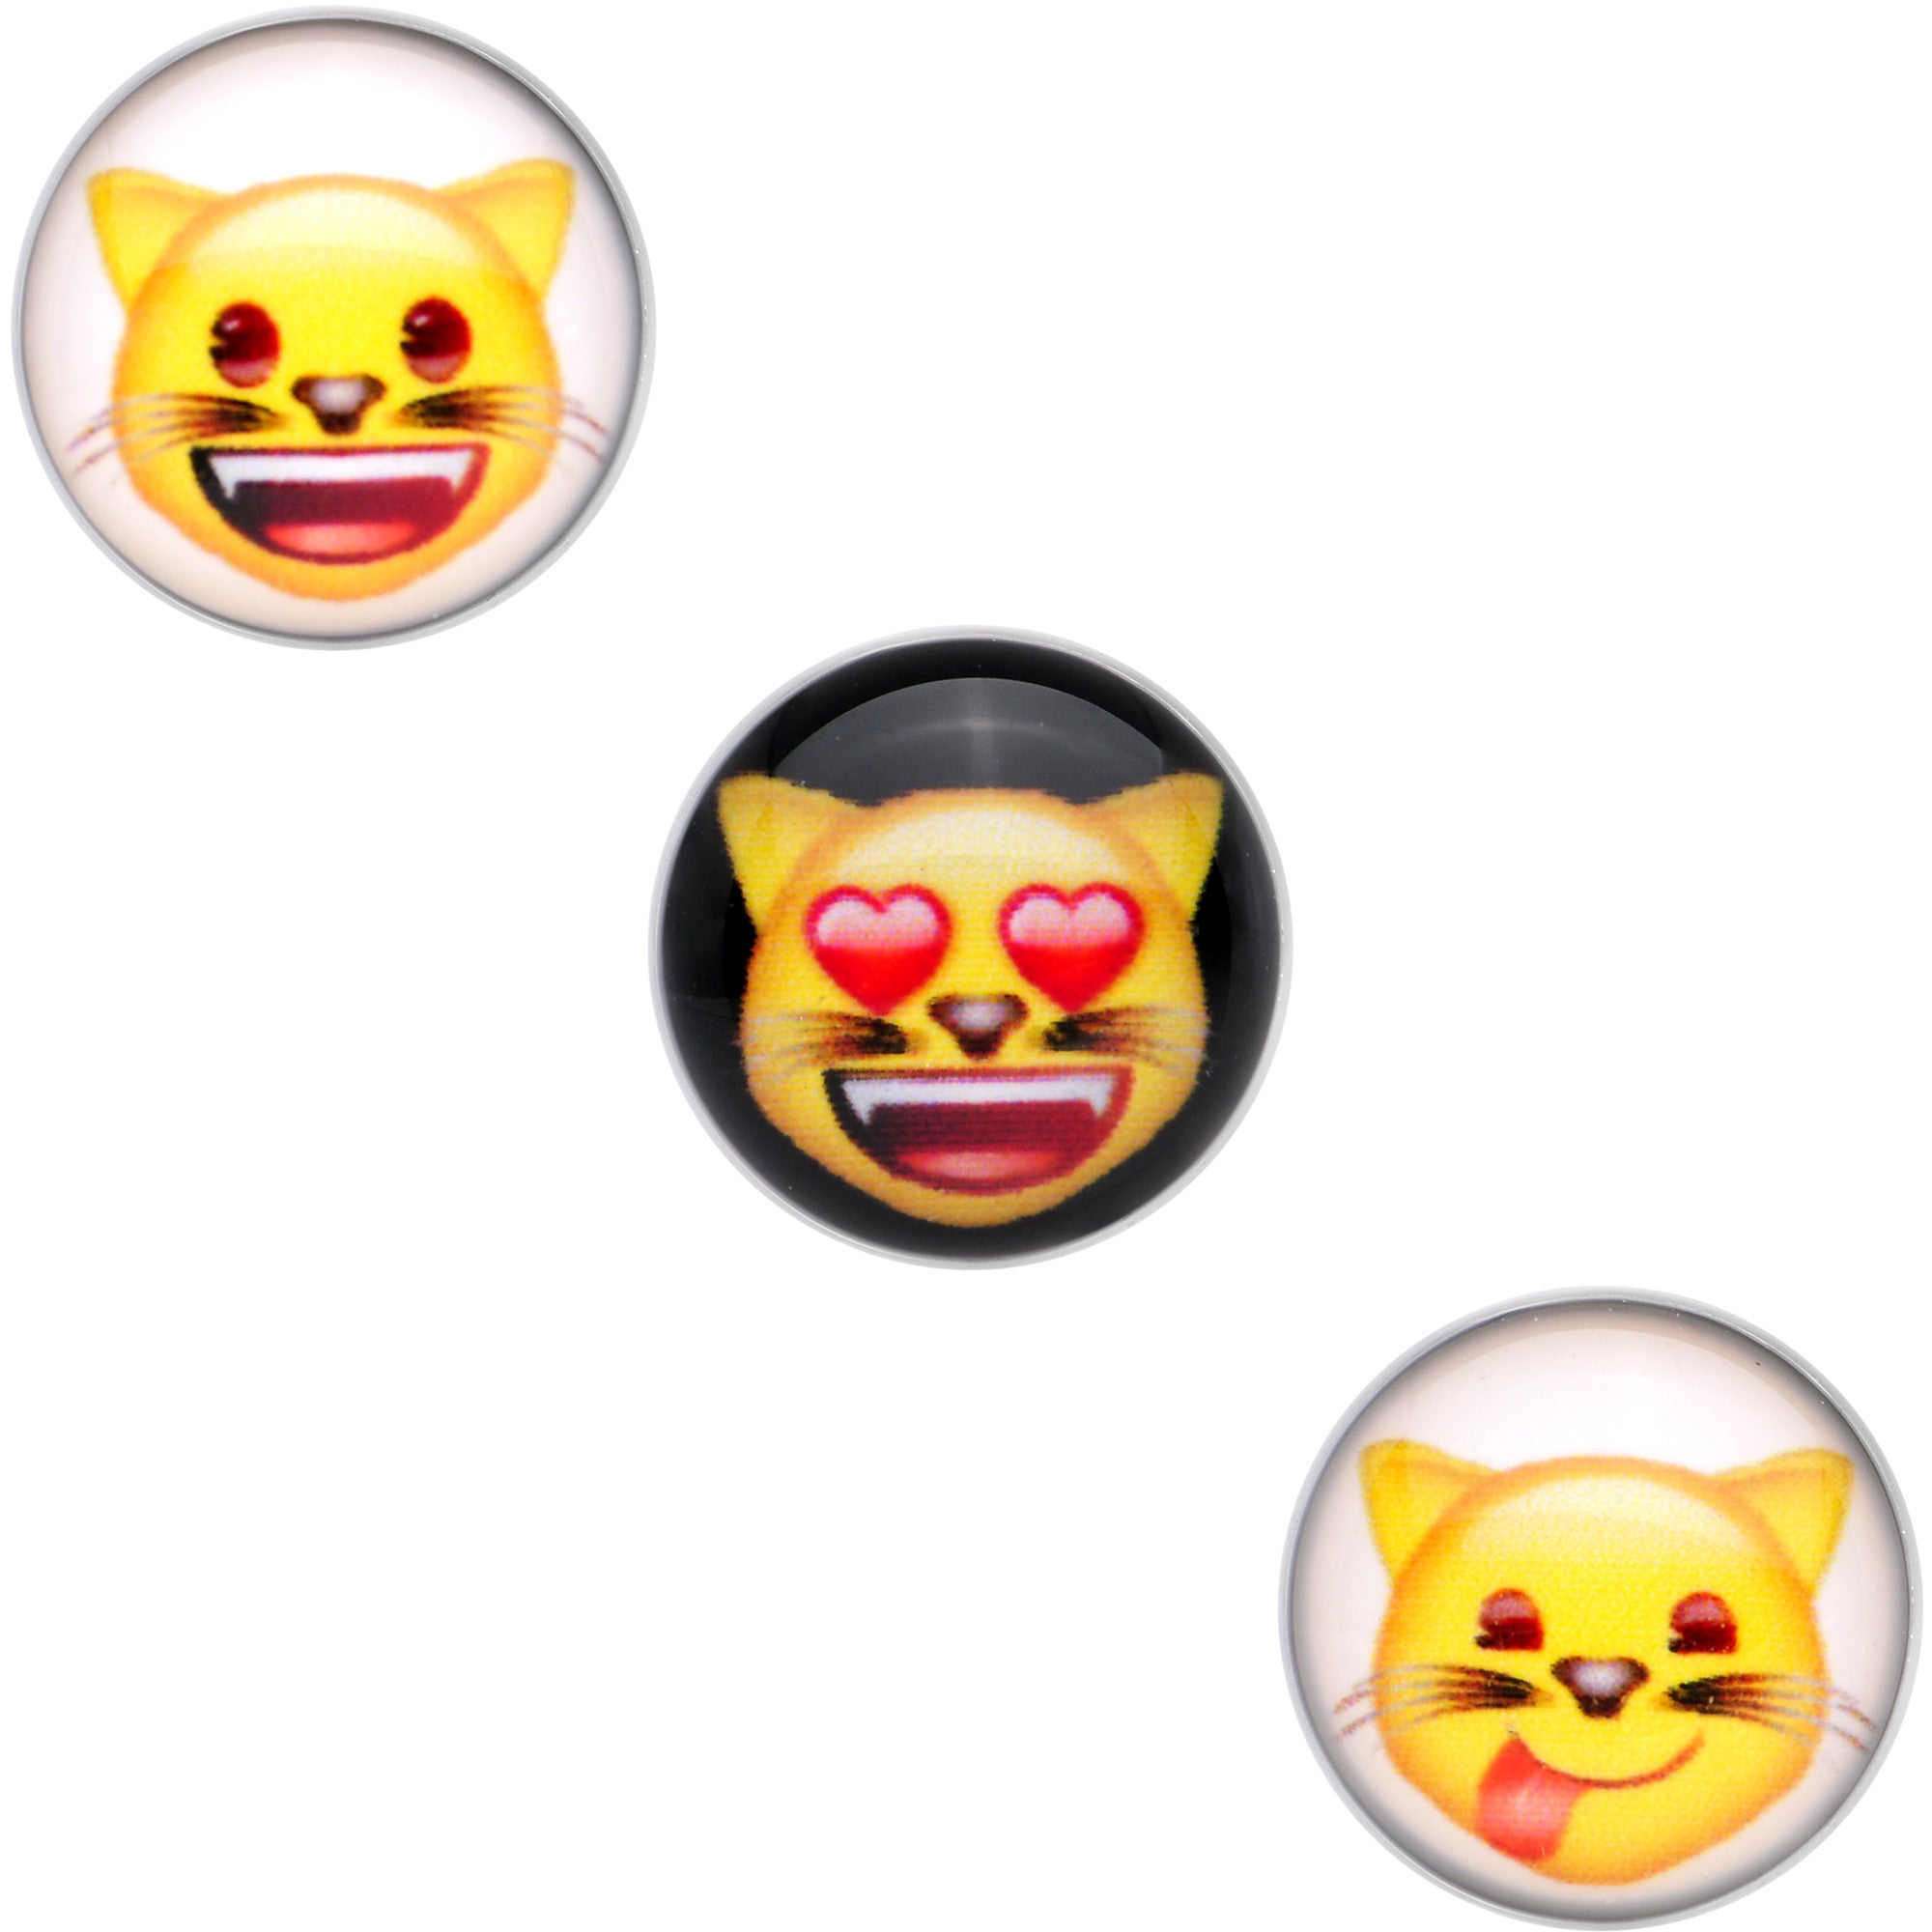 5/8 Licensed Cat Face emoji Tongue Ring Set of 3